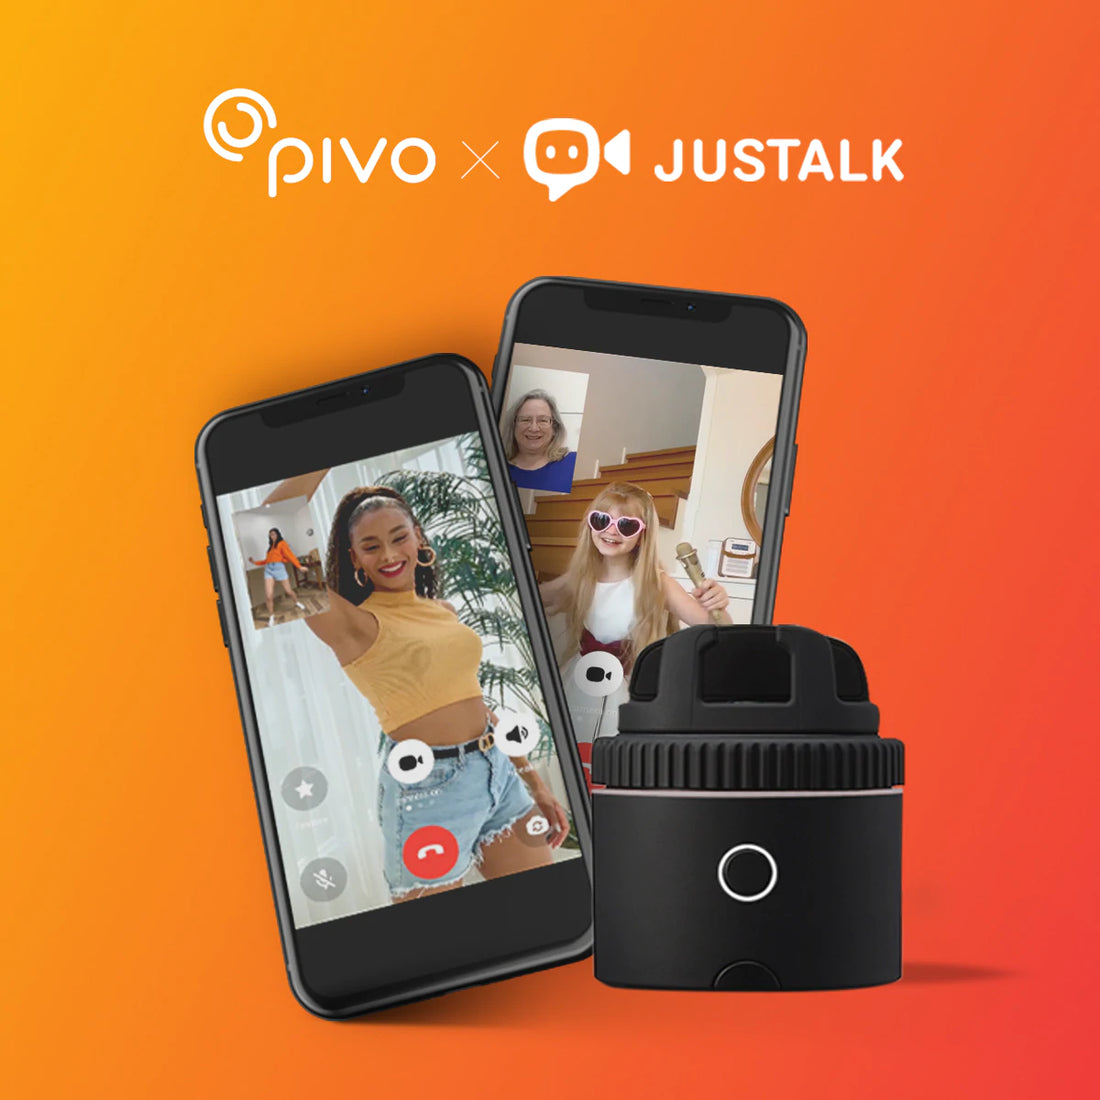 JusTalk and Pivo Partner to Bring Creative Fun to Video Communication